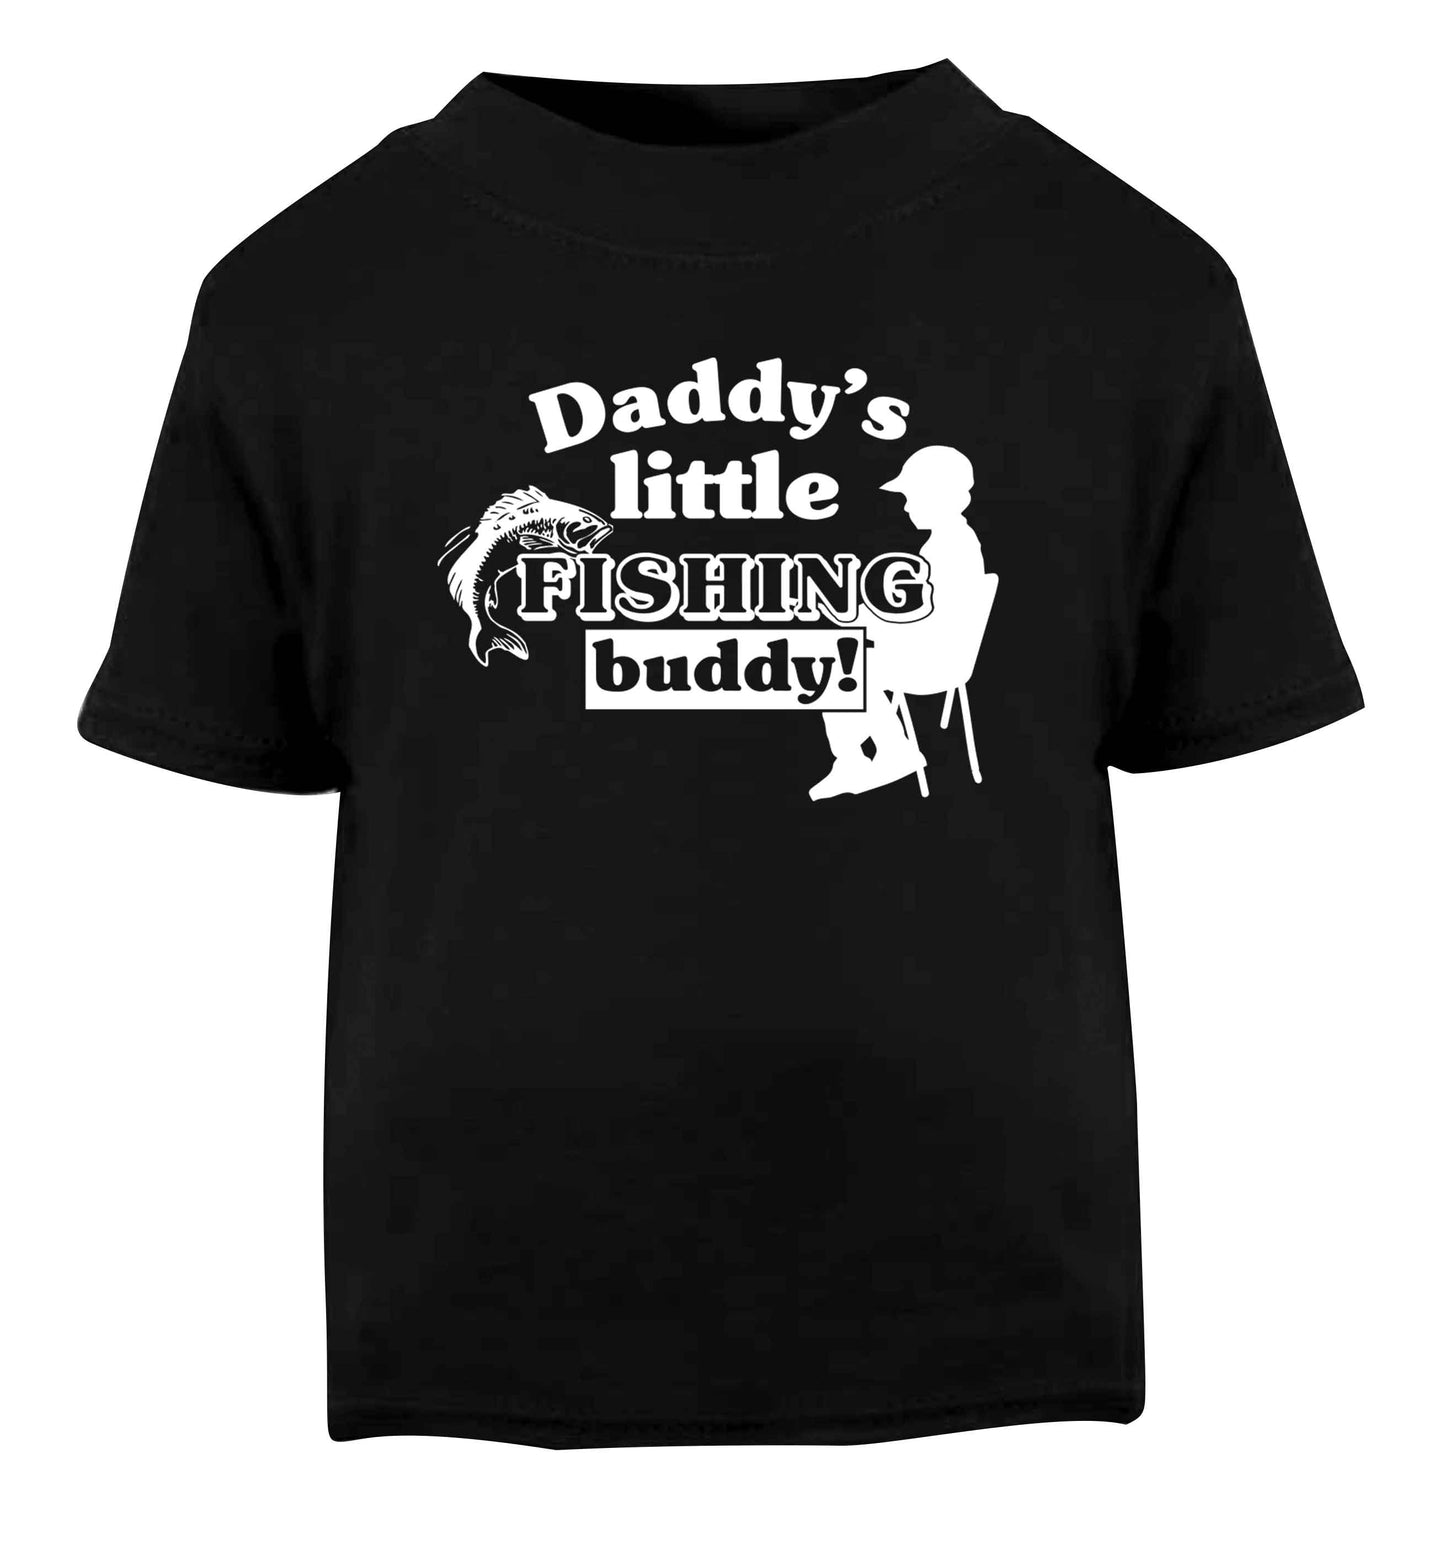 Daddy's little fishing buddy Black Baby Toddler Tshirt 2 years